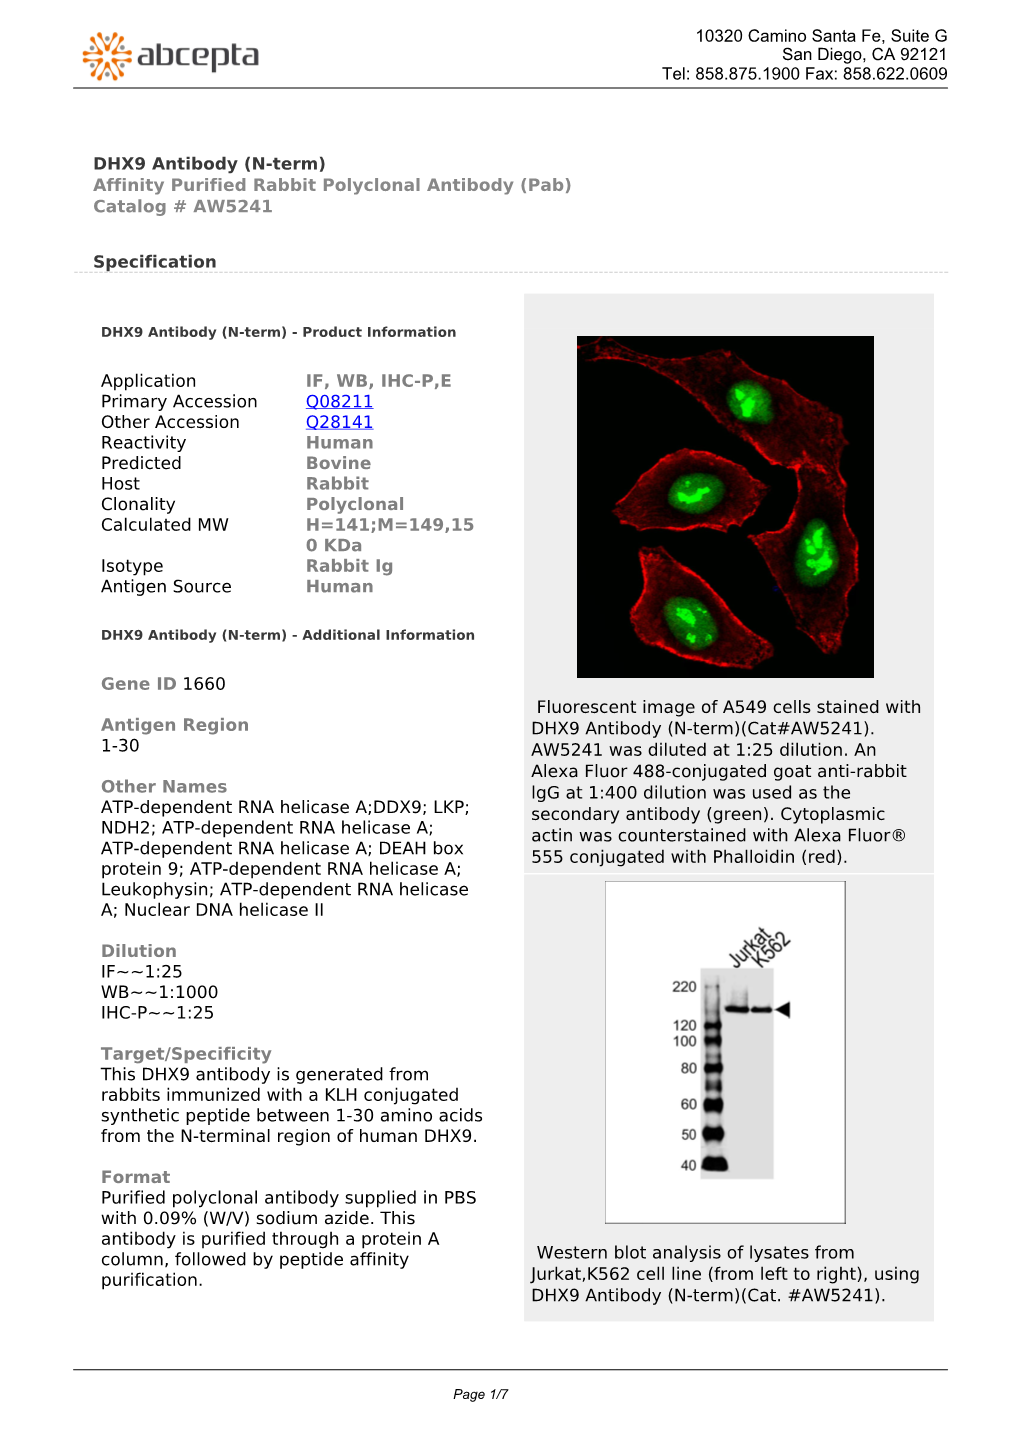 DHX9 Antibody (N-Term) Affinity Purified Rabbit Polyclonal Antibody (Pab) Catalog # AW5241